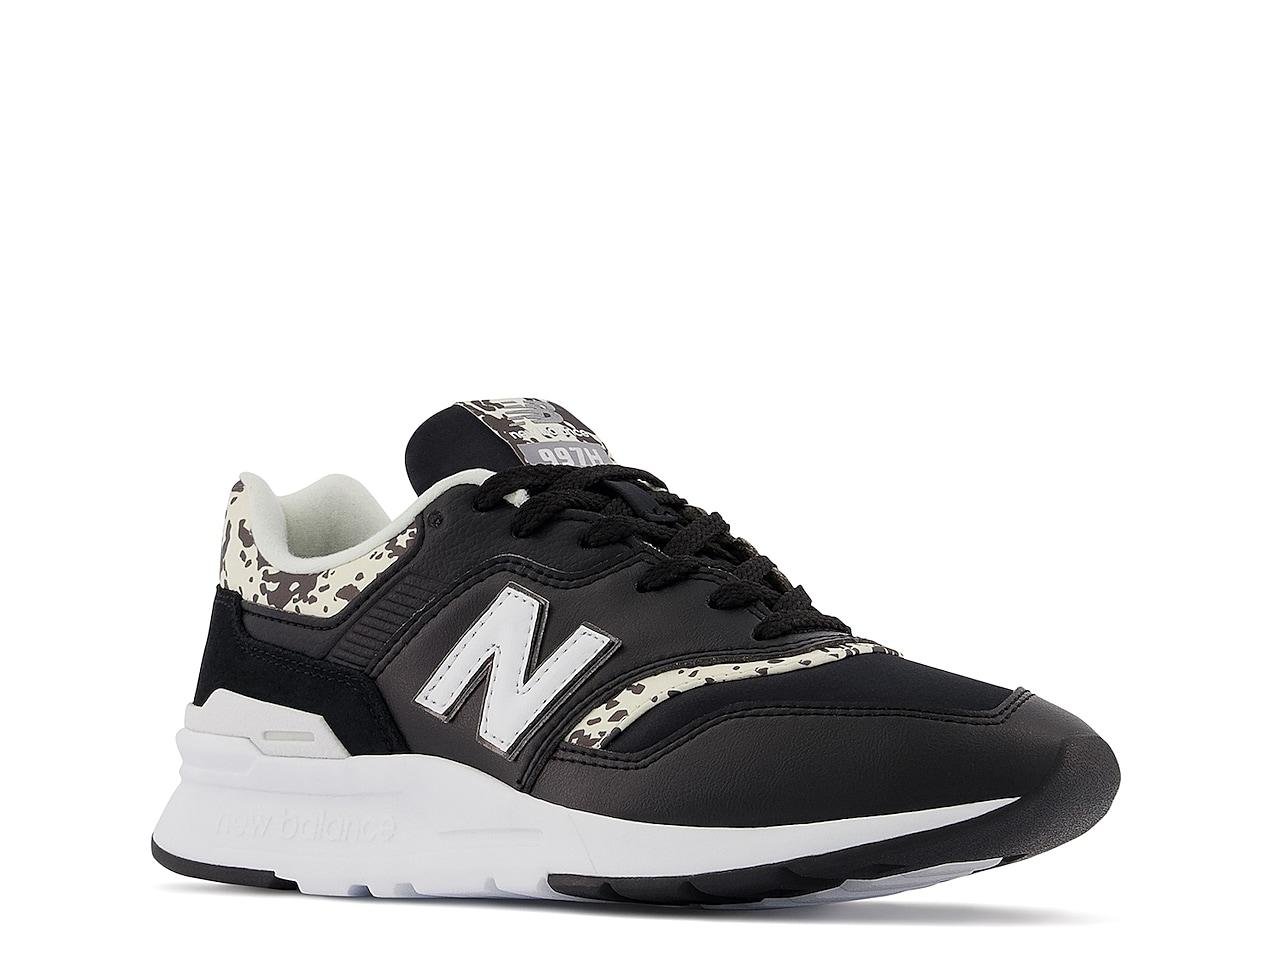 New Balance 997h Sneaker in Black | Lyst